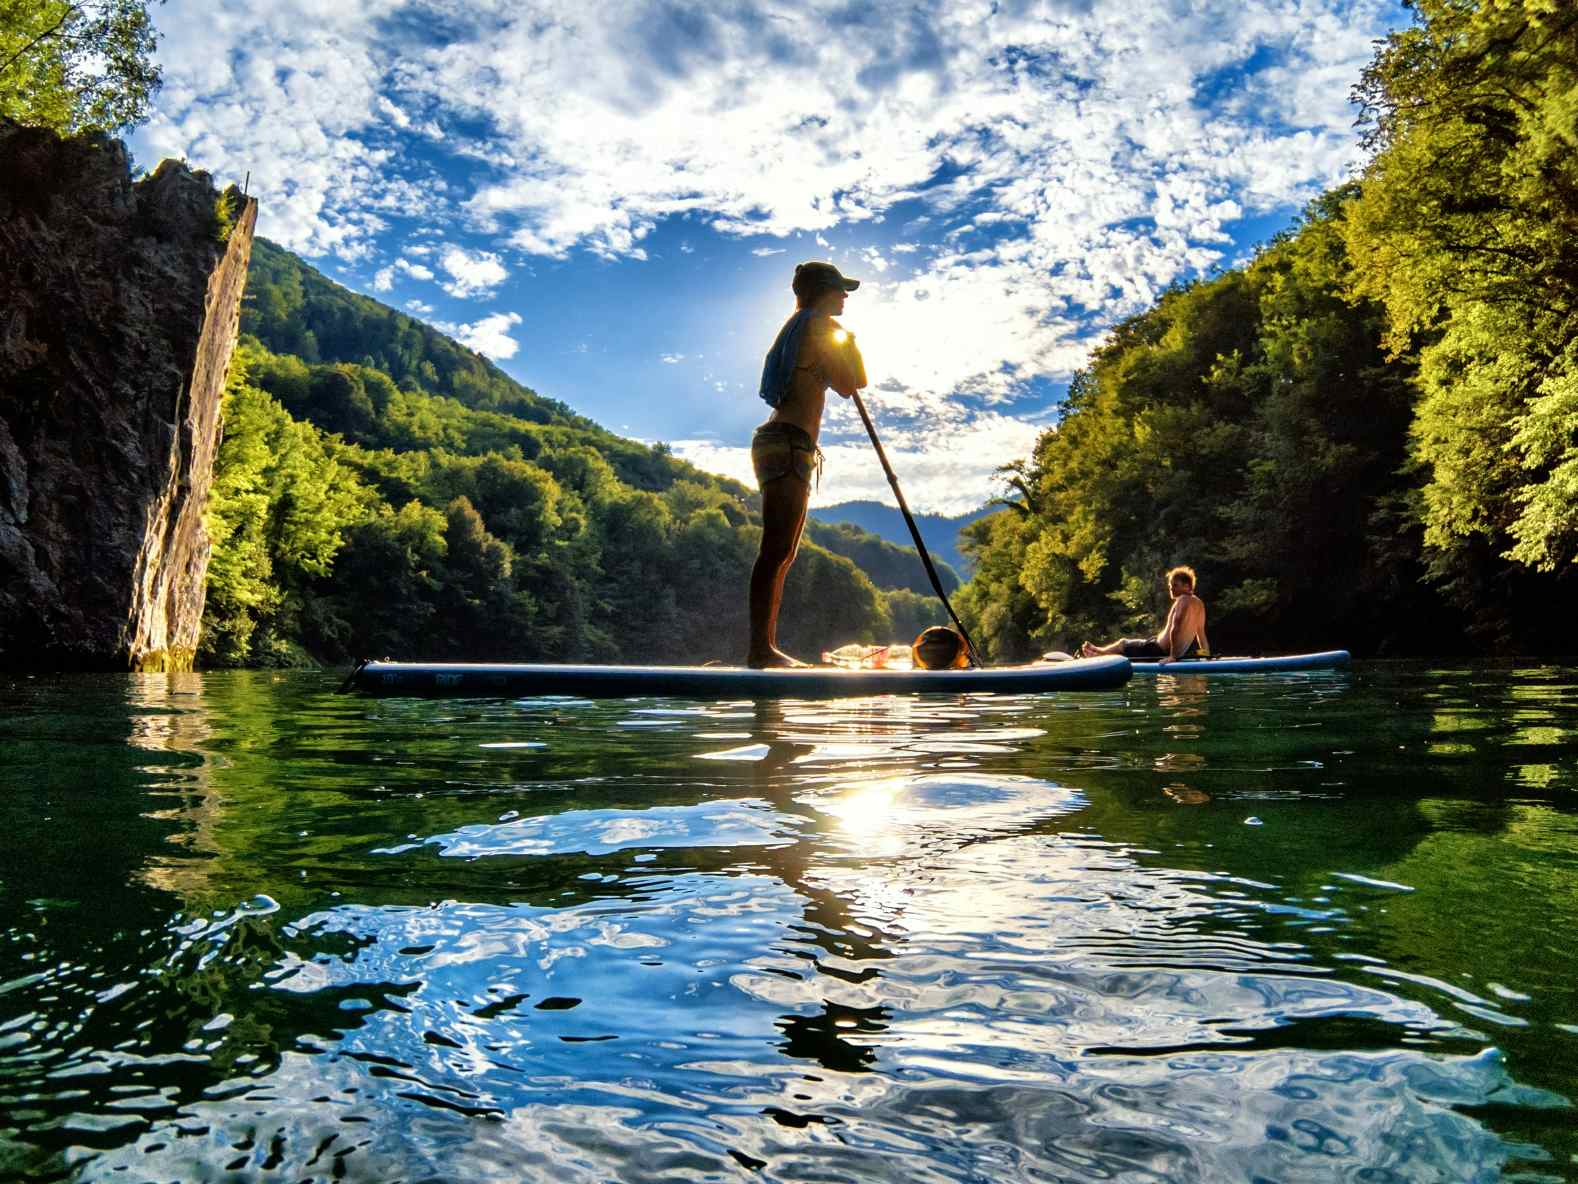 SUP in the Soca Valley, Slovenia. Photo: Host/Wajdusna